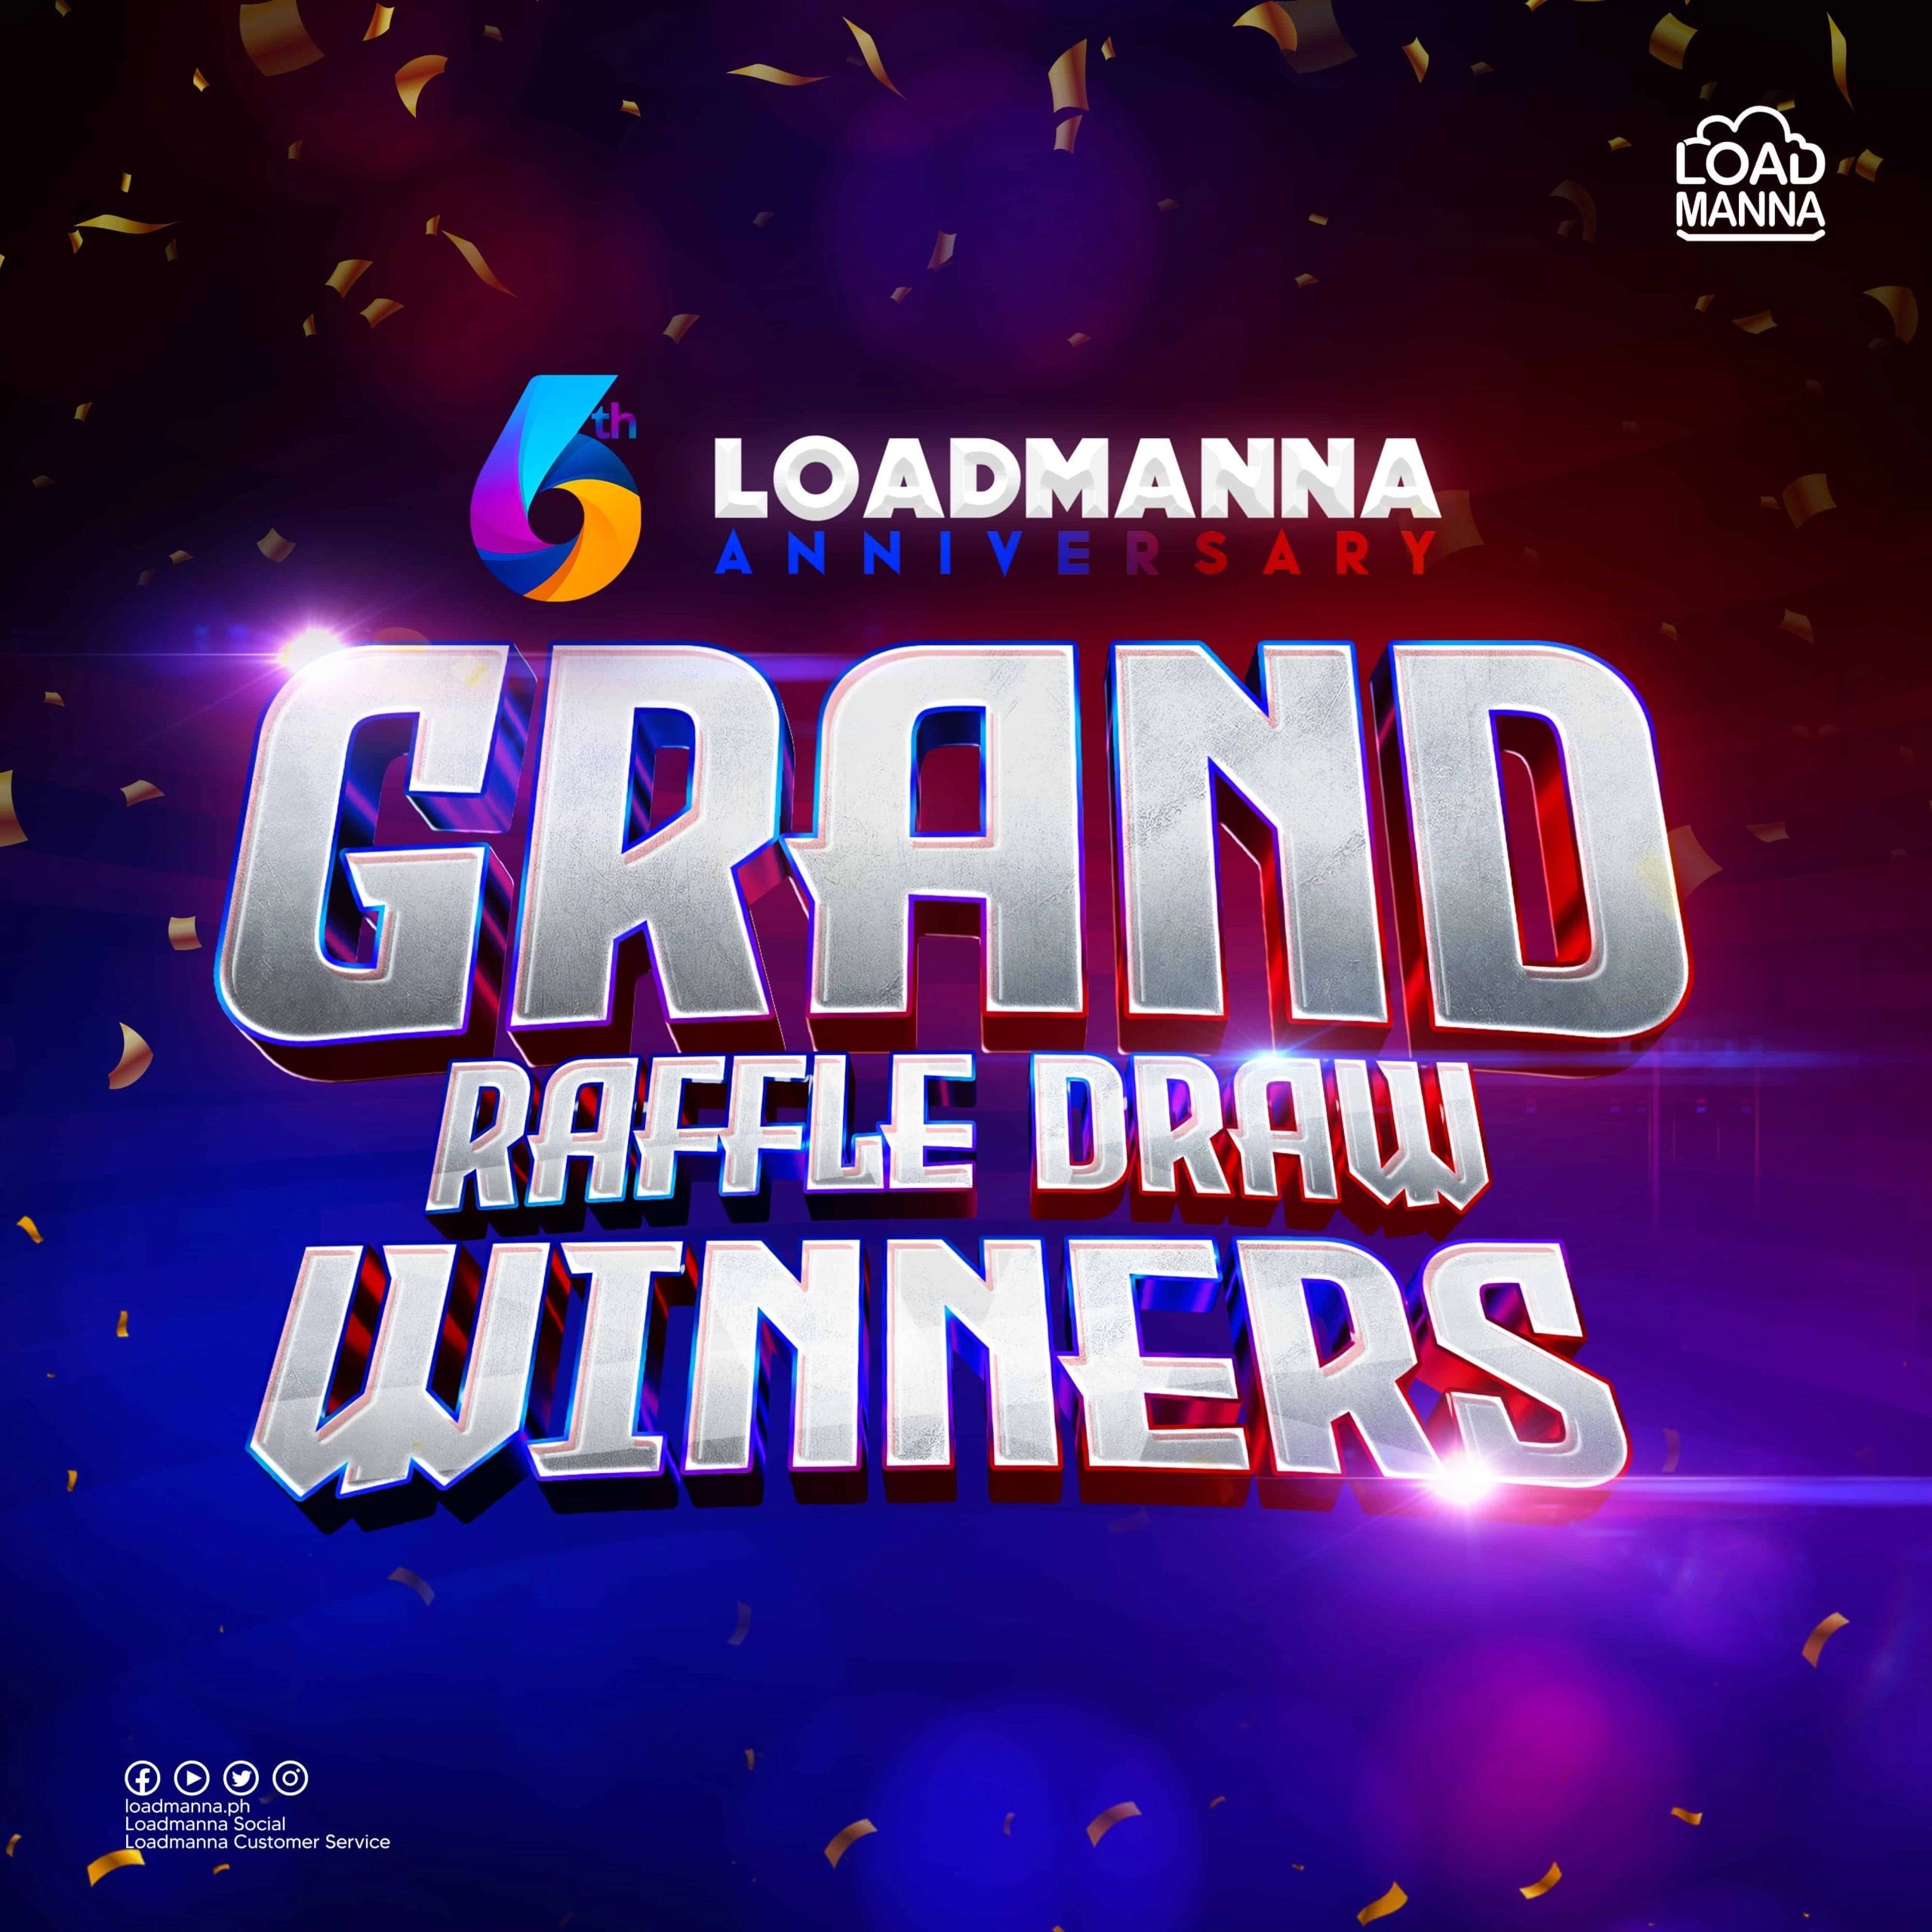 Loadmanna 6th Year Anniversary
Grand Raffle Draw Winners